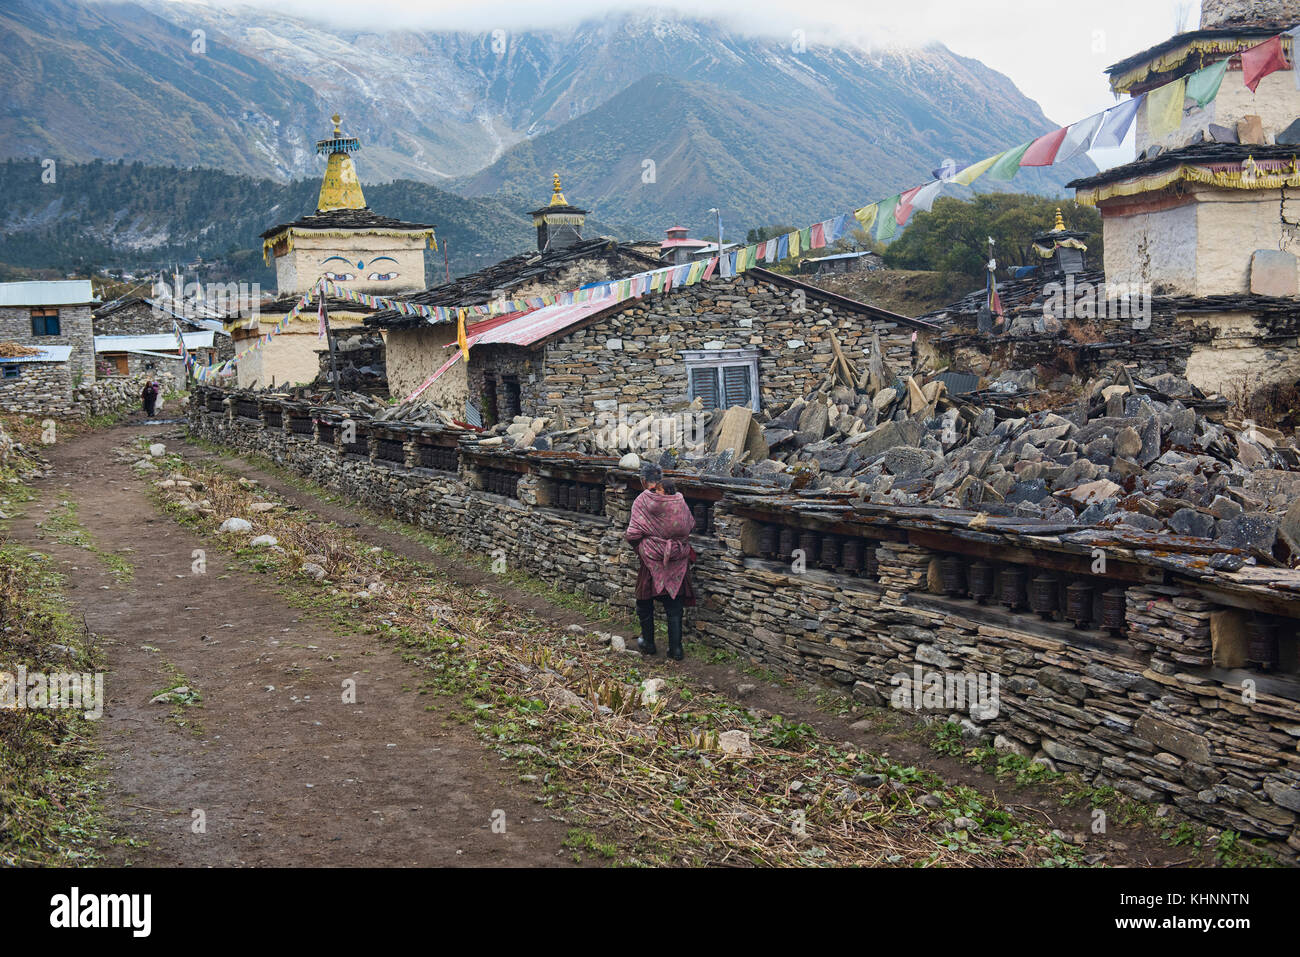 Mani wall leading into the village of Samagaon, a Tibetan area in the Manaslu region, Nepal Stock Photo